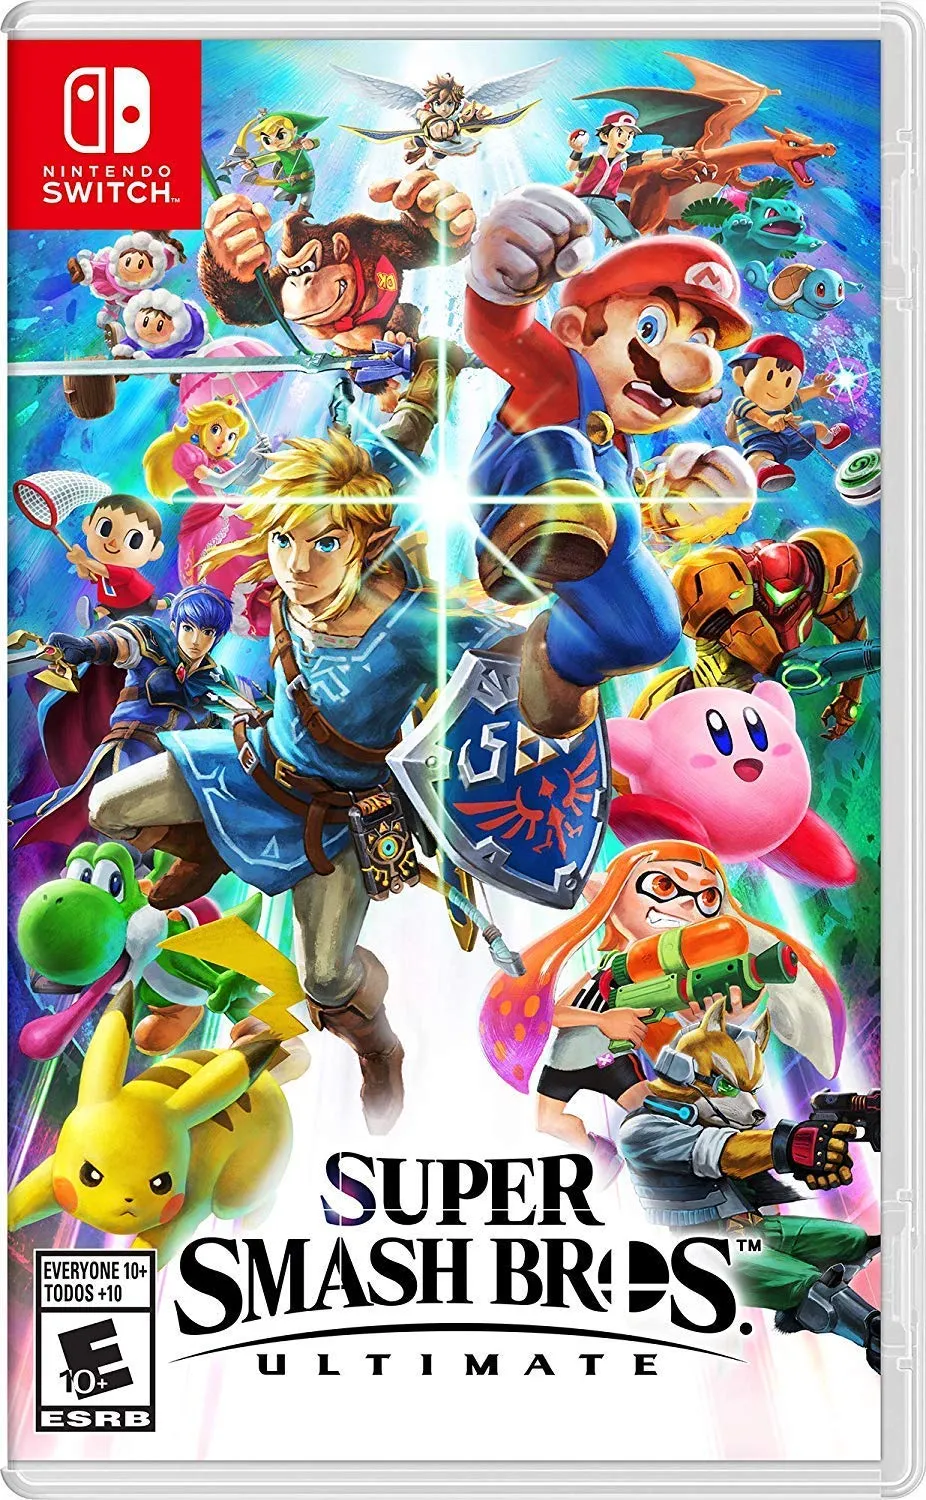 Super Smash Bros Ultimate sur Nintendo Switch.